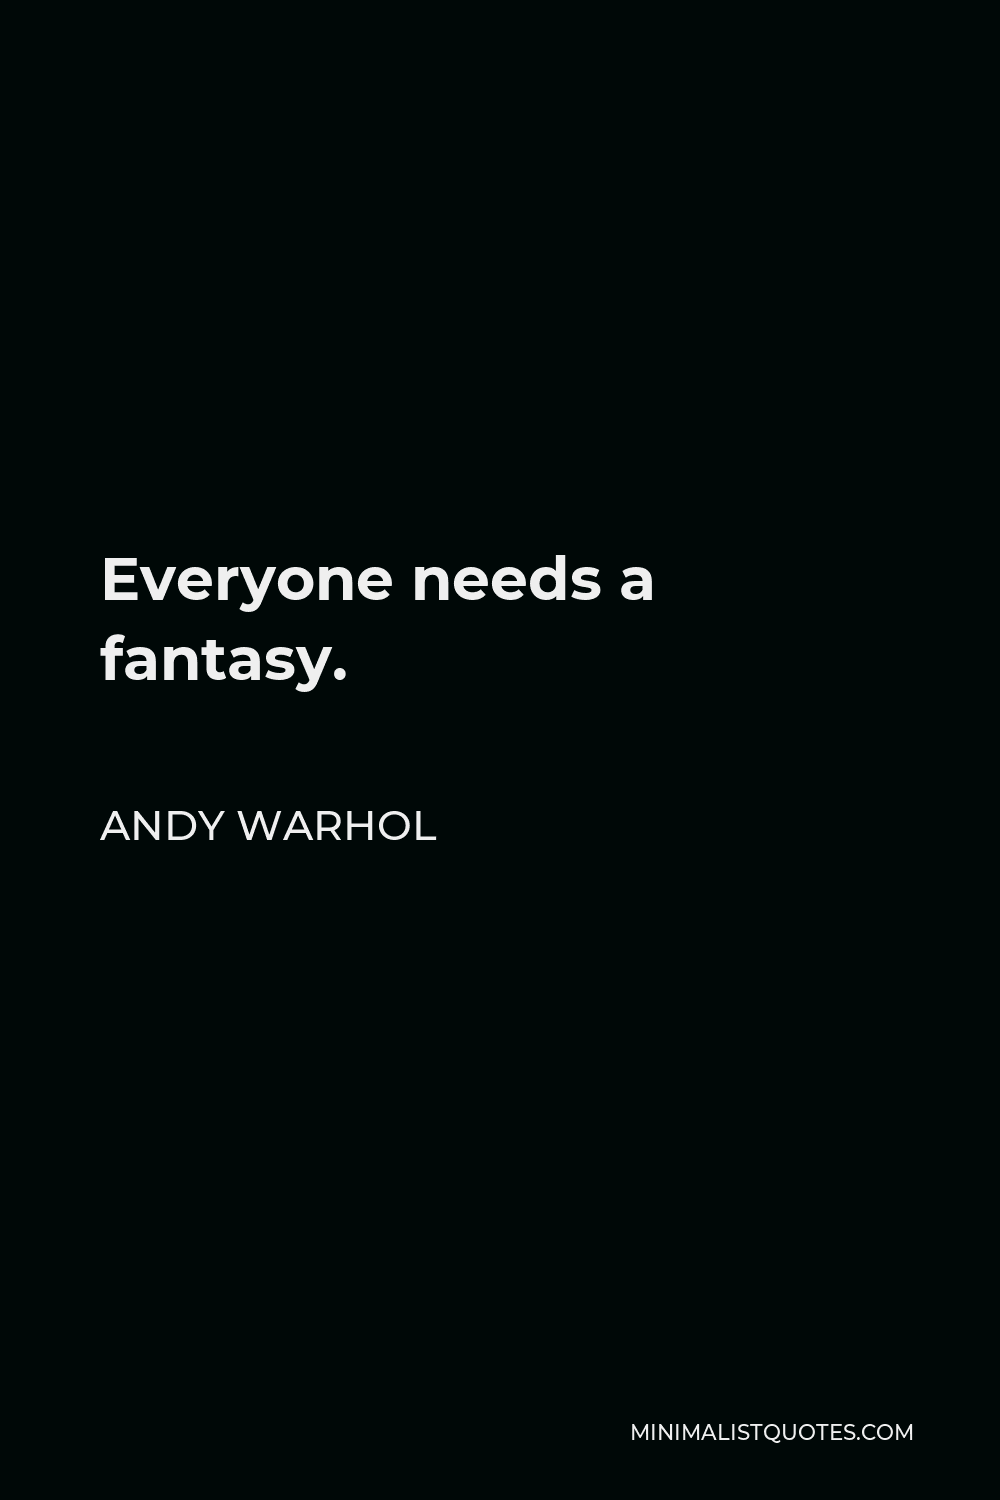 Andy Warhol Quote - Everyone needs a fantasy.